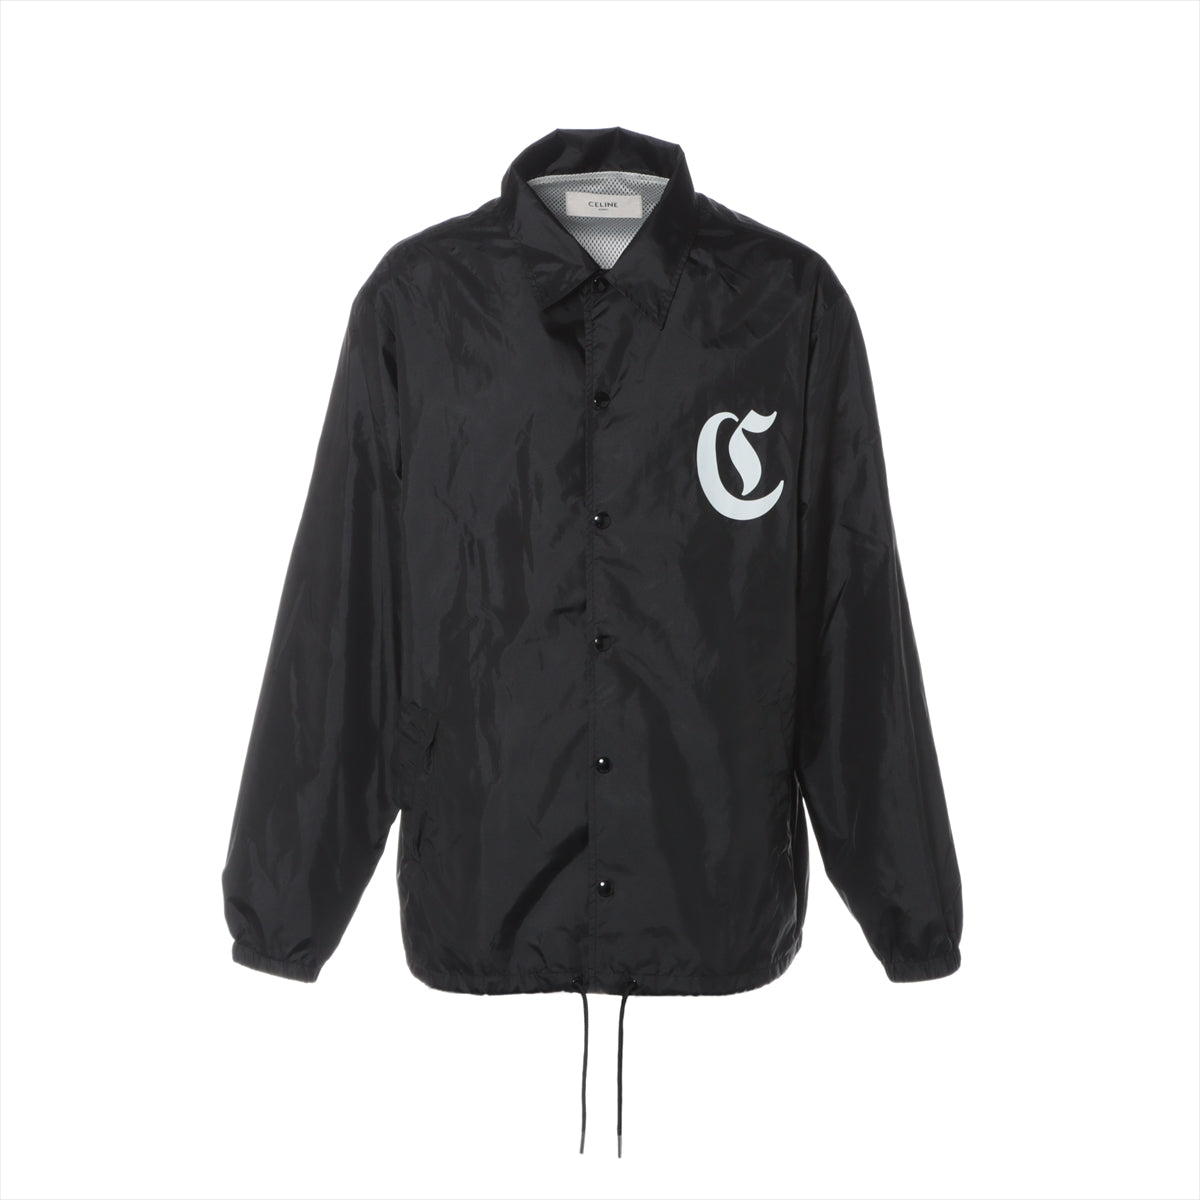 CELINE Nylon Coach jacket 50 Men's Black  initial logo print loose fit 2W544495M